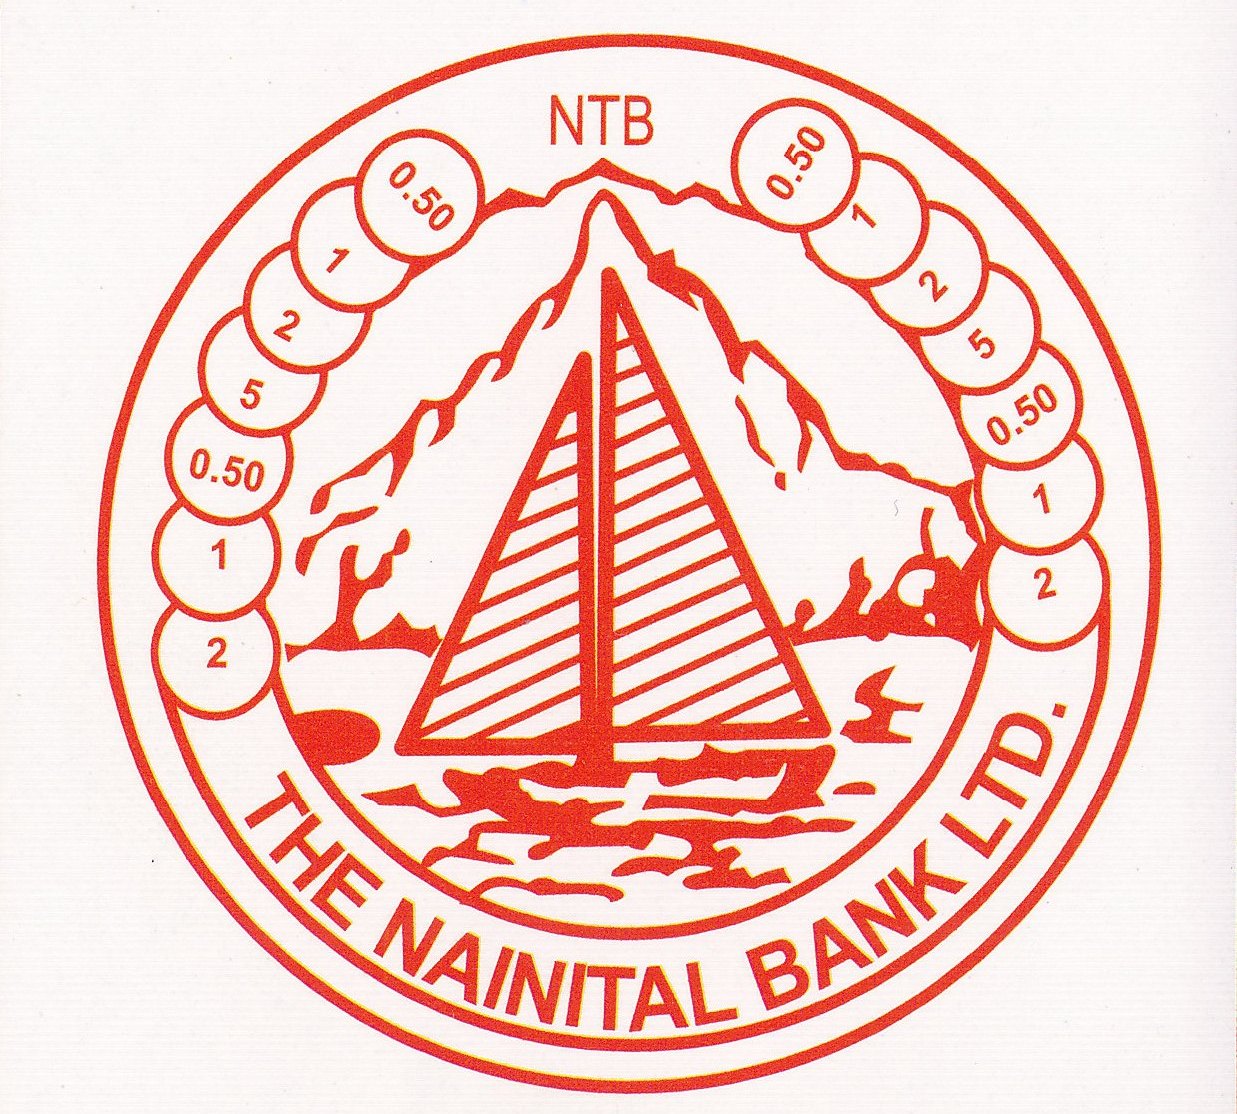 Nainital Bank Recruitment 2015 www.nainitalbank.co.in For 30 Clerk Posts